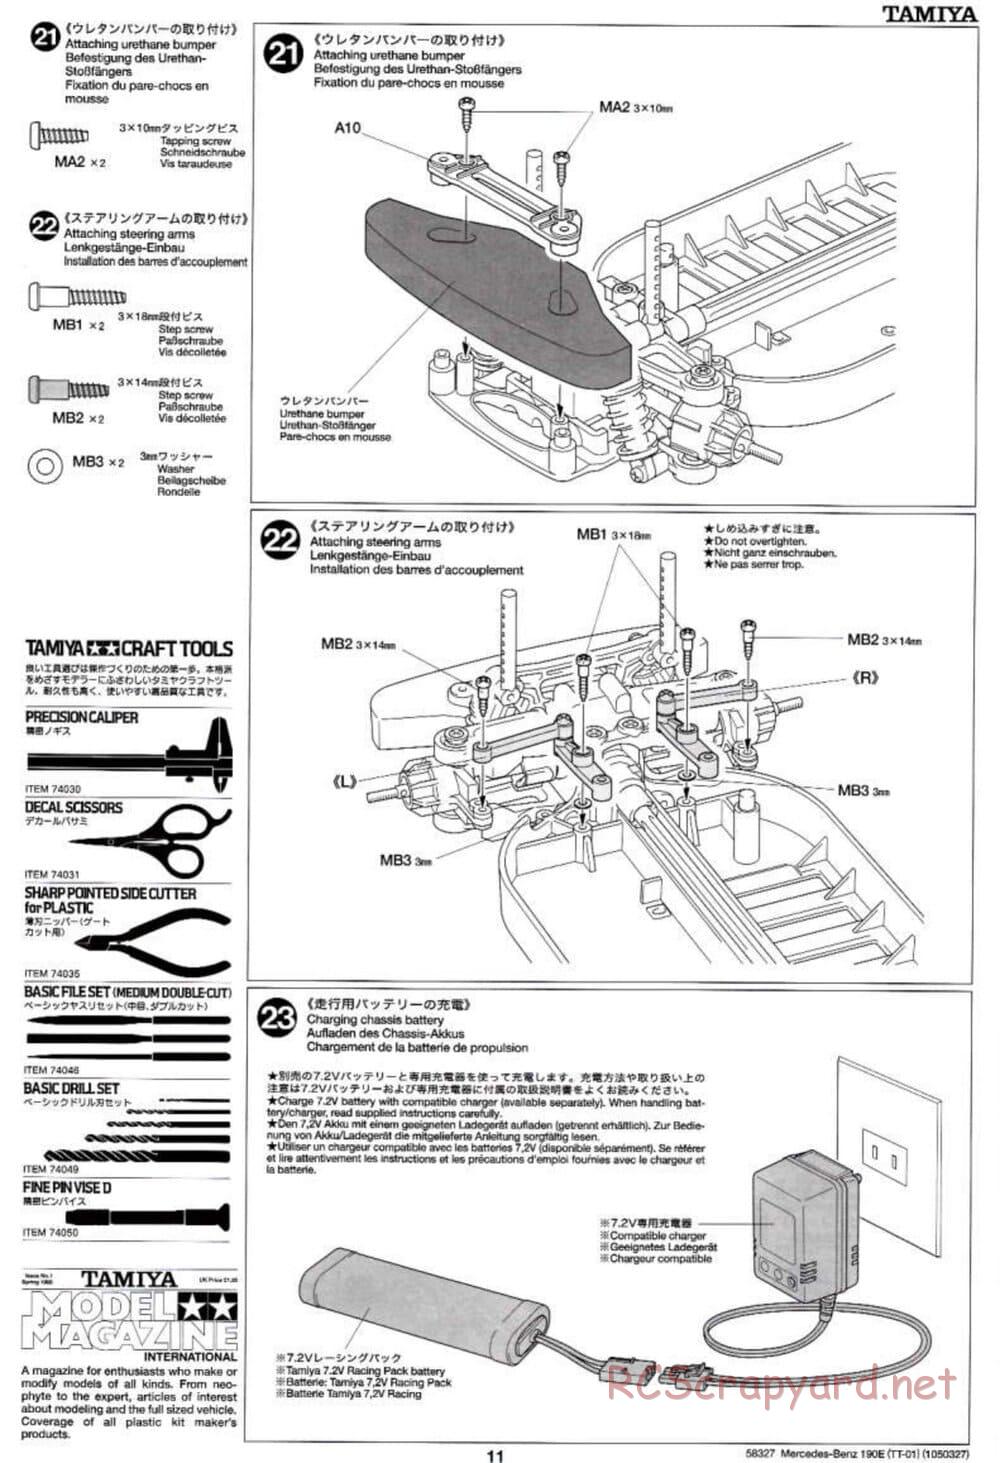 Tamiya - Mercedes Benz 190E Evo.II AMG - TT-01 Chassis - Manual - Page 11